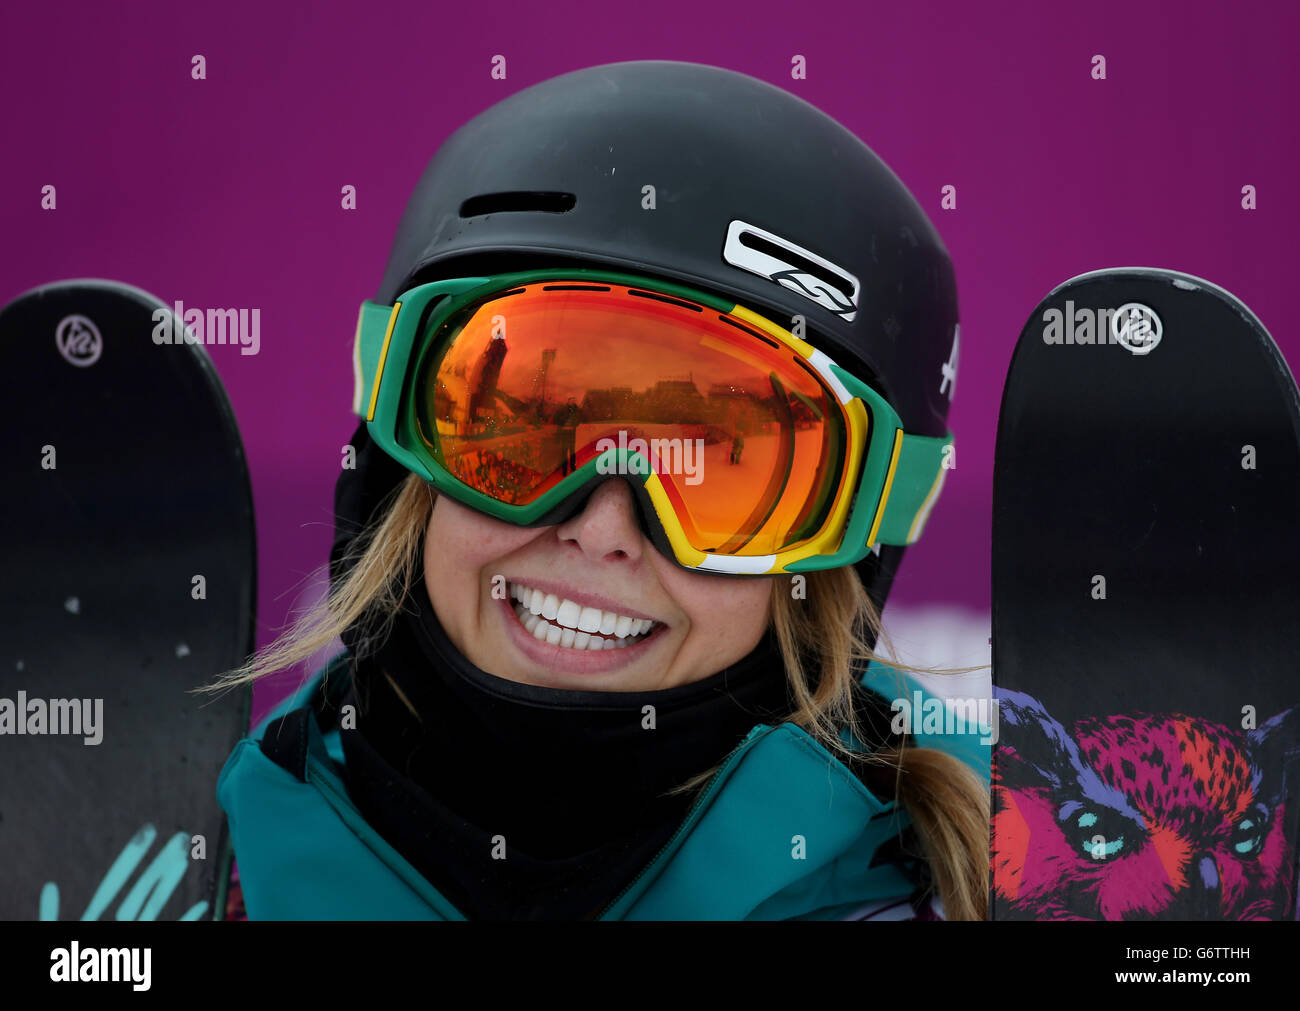 Sochi Winter Olympic Games - Day 4 Stock Photo